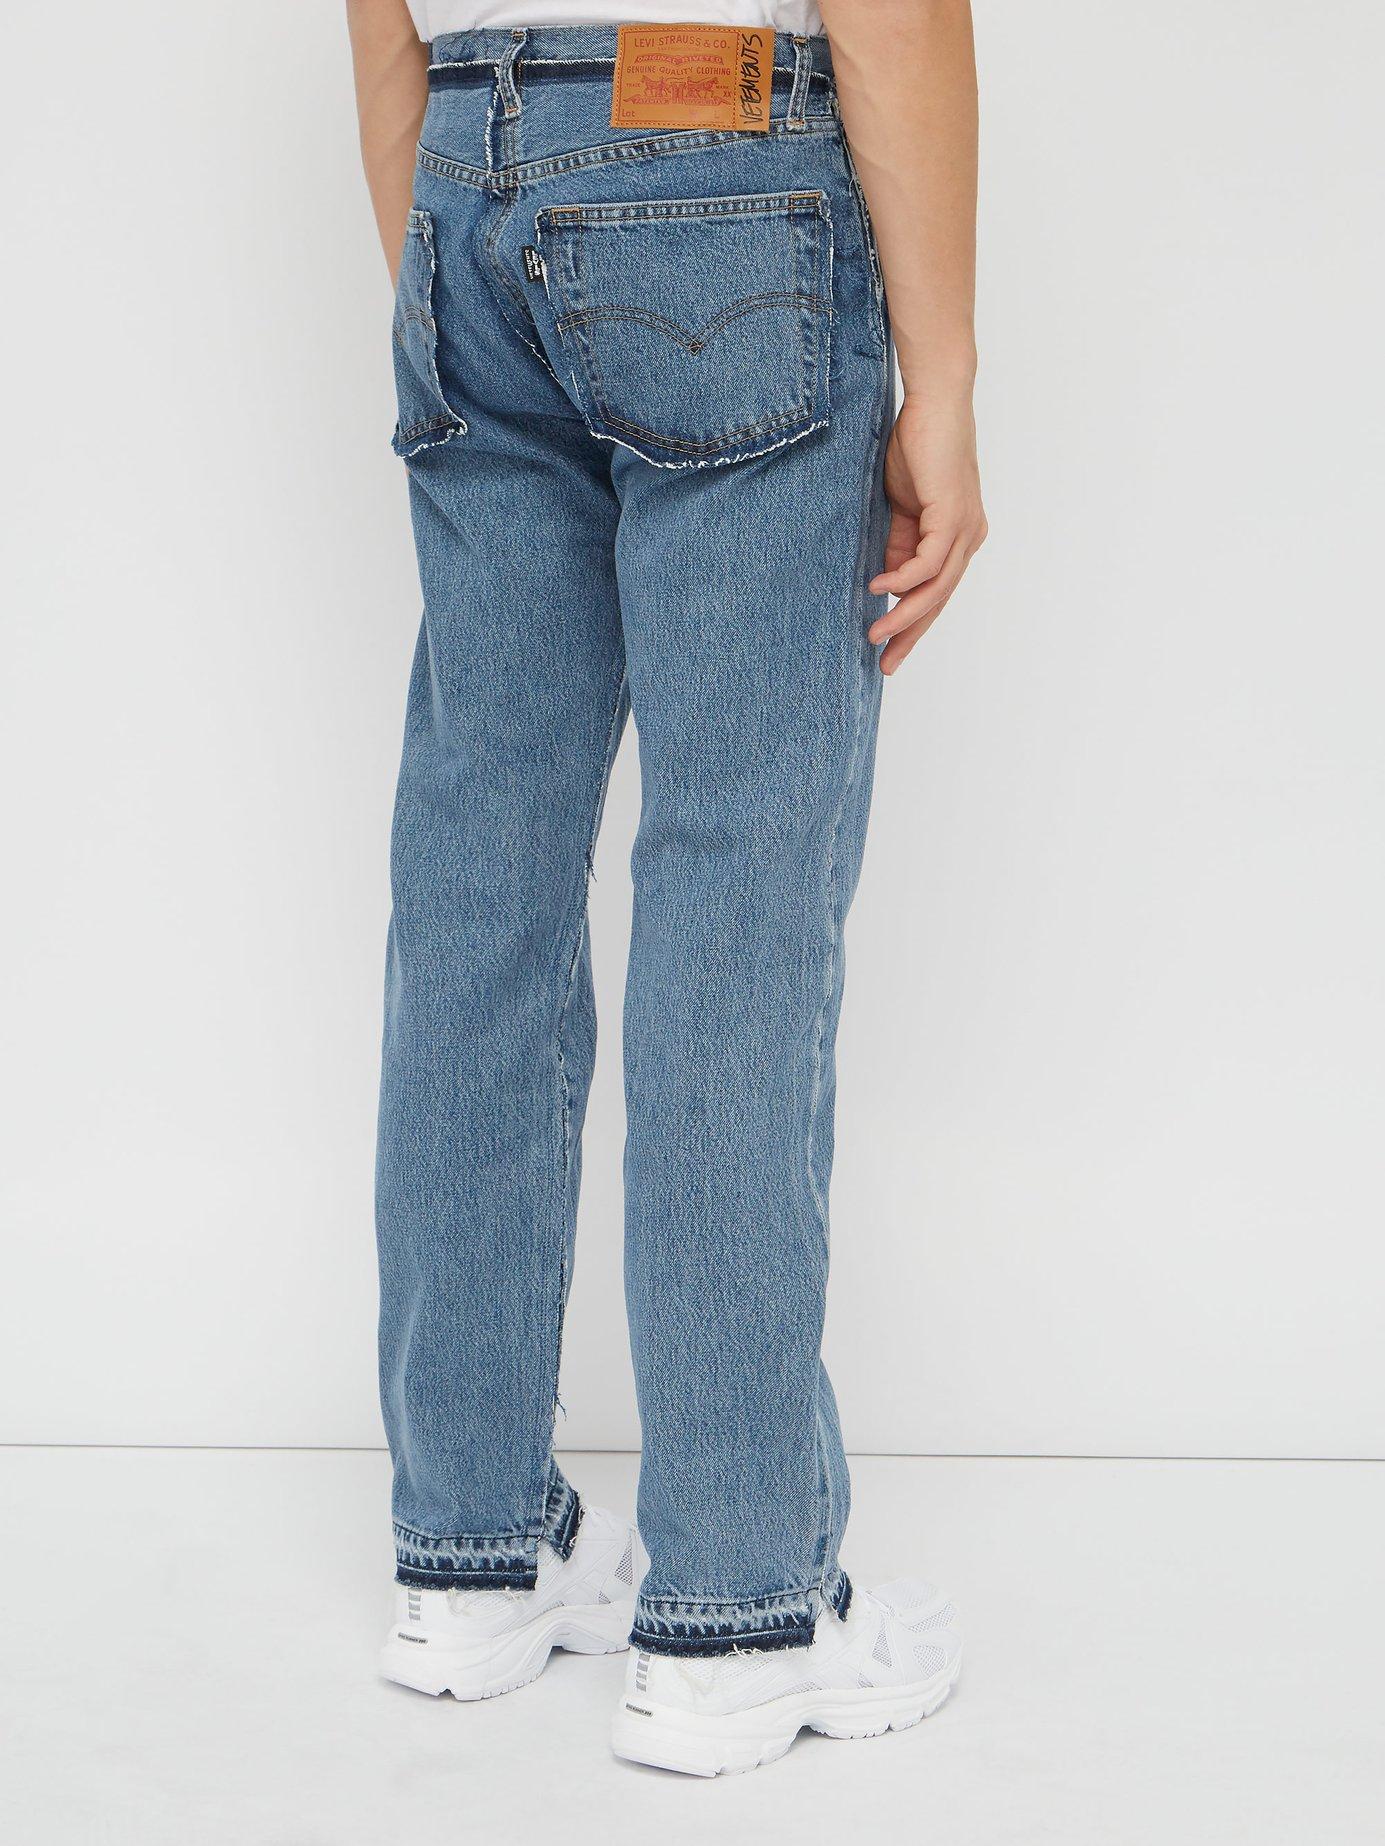 Vetements X Levi's Deconstructed Reworked Blue Jeans for Men | Lyst